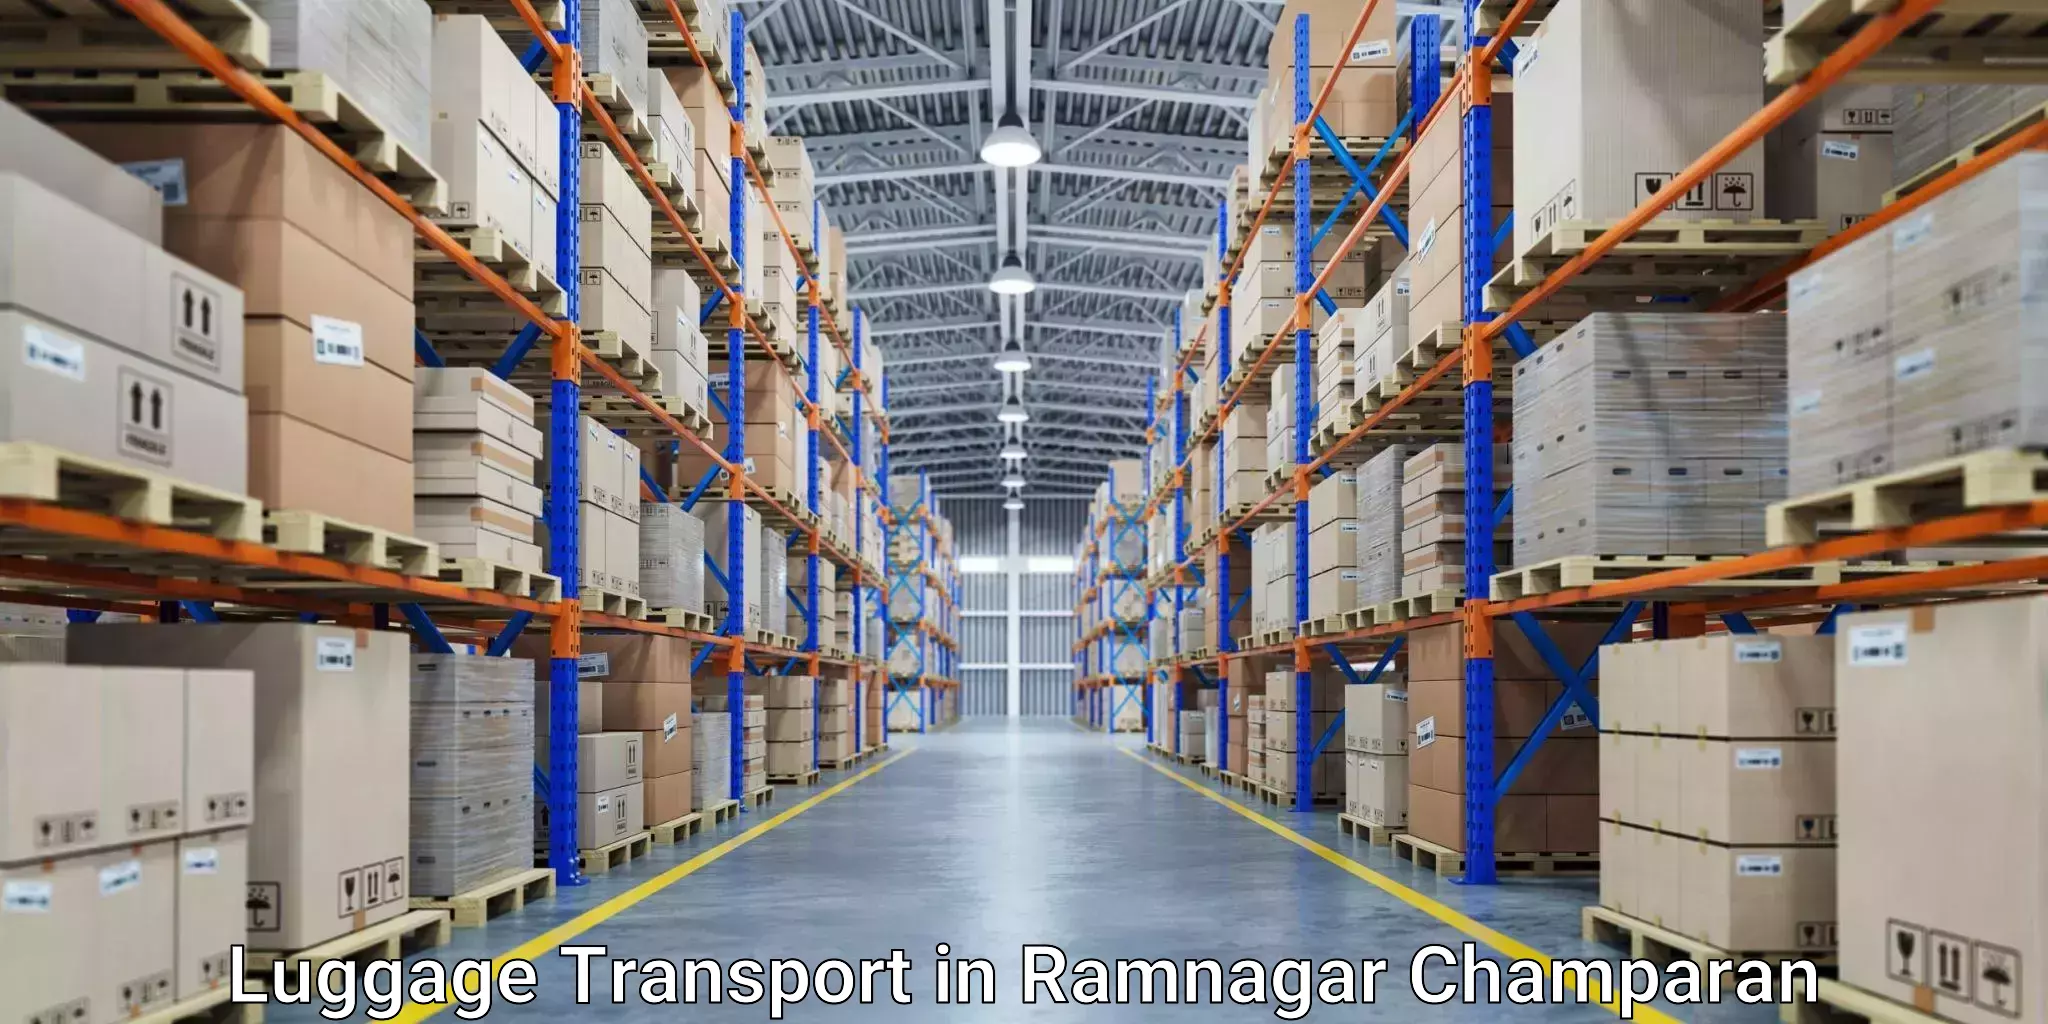 Luggage transport logistics in Ramnagar Champaran